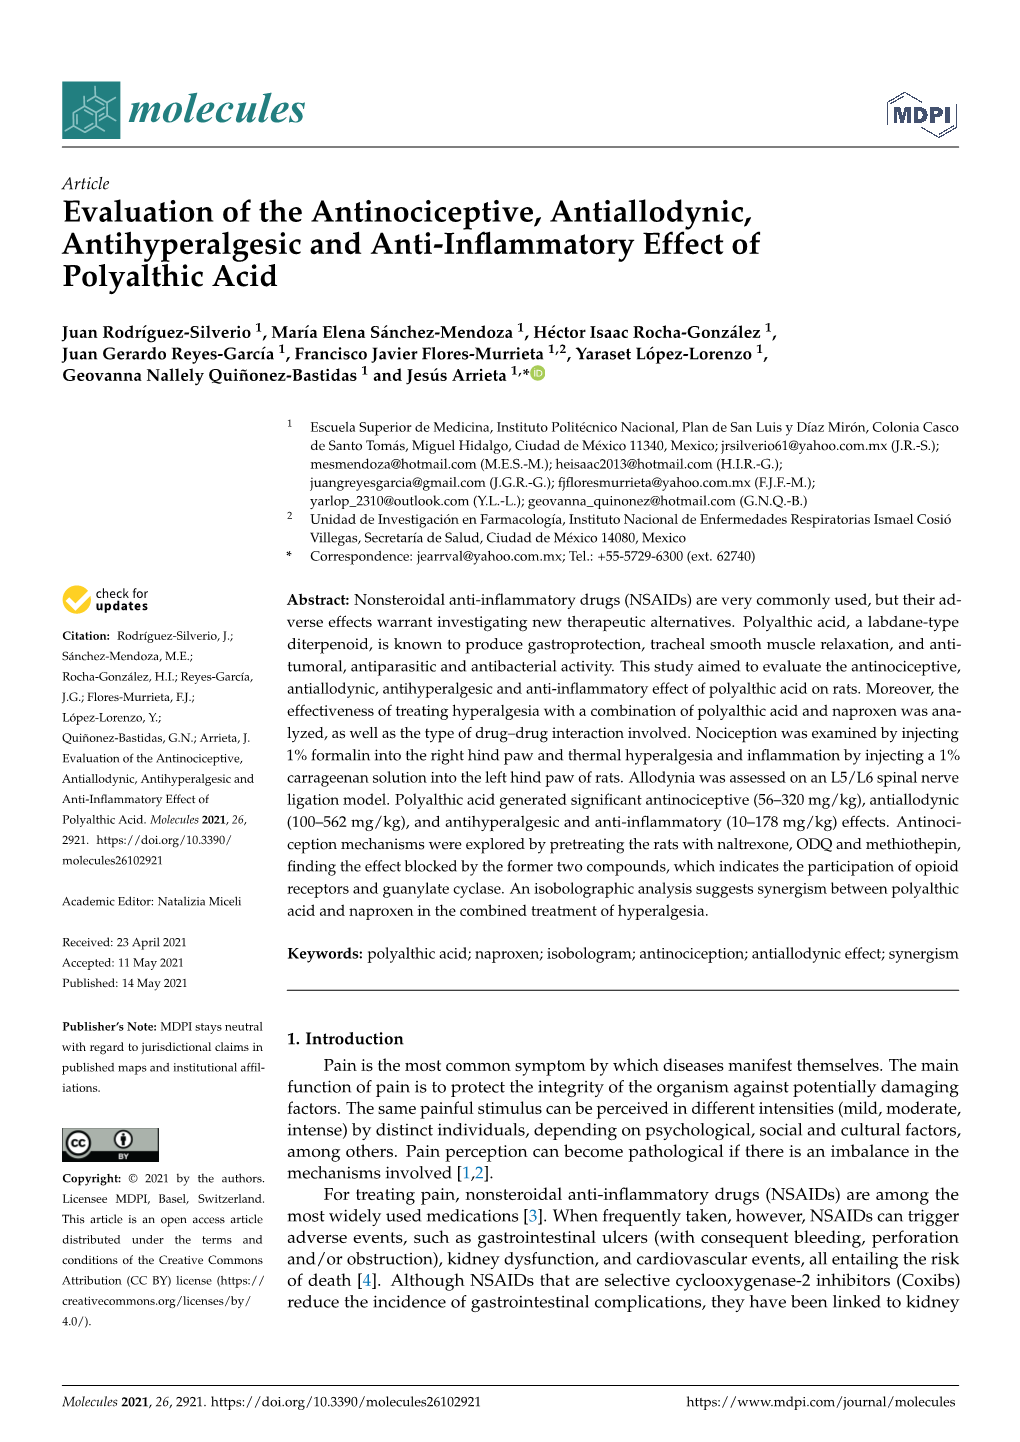 Evaluation of the Antinociceptive, Antiallodynic, Antihyperalgesic and Anti-Inﬂammatory Effect of Polyalthic Acid